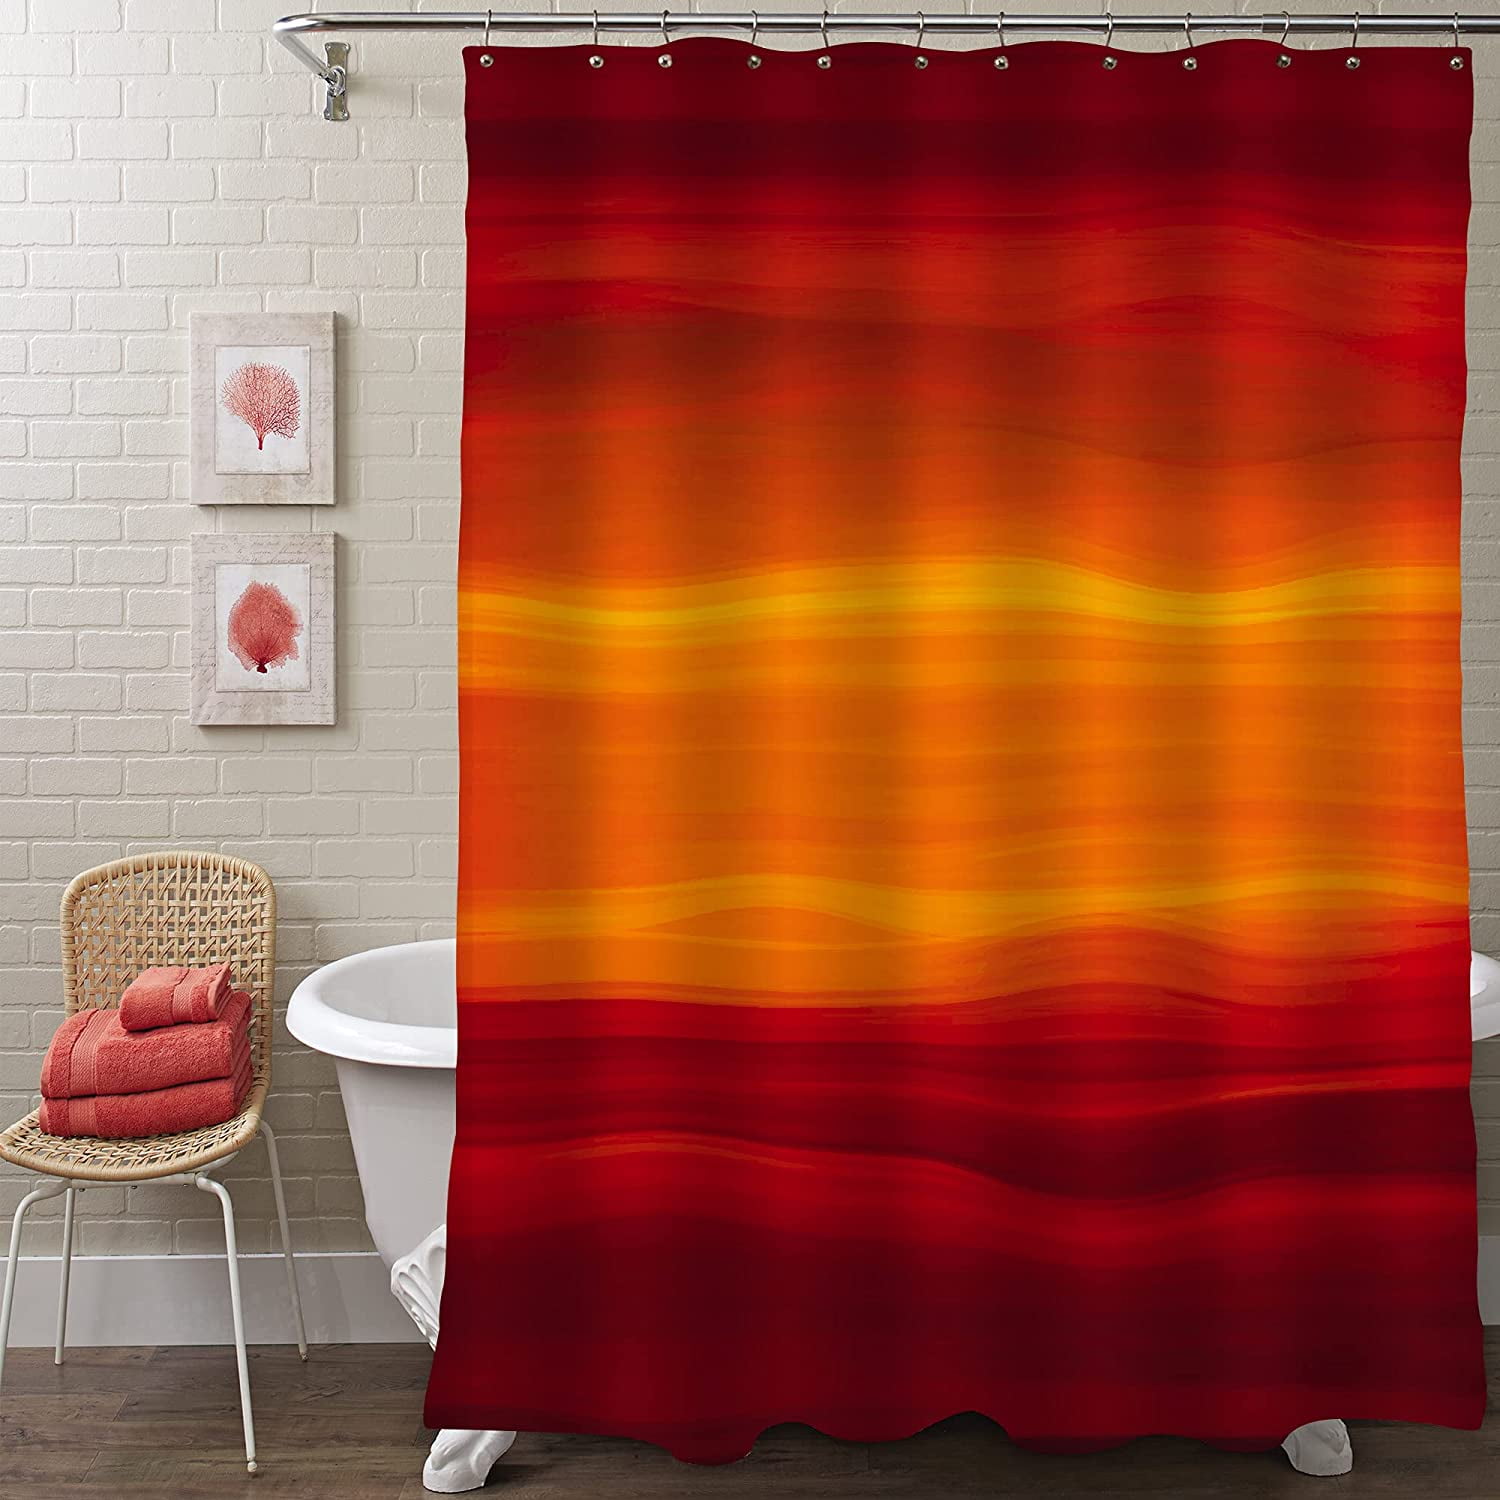 Blue Kraken Bathroom Decor Waterproof Fabric Polyester Sets with Hooks,60 Octopus Shower Curtain x 72 h w